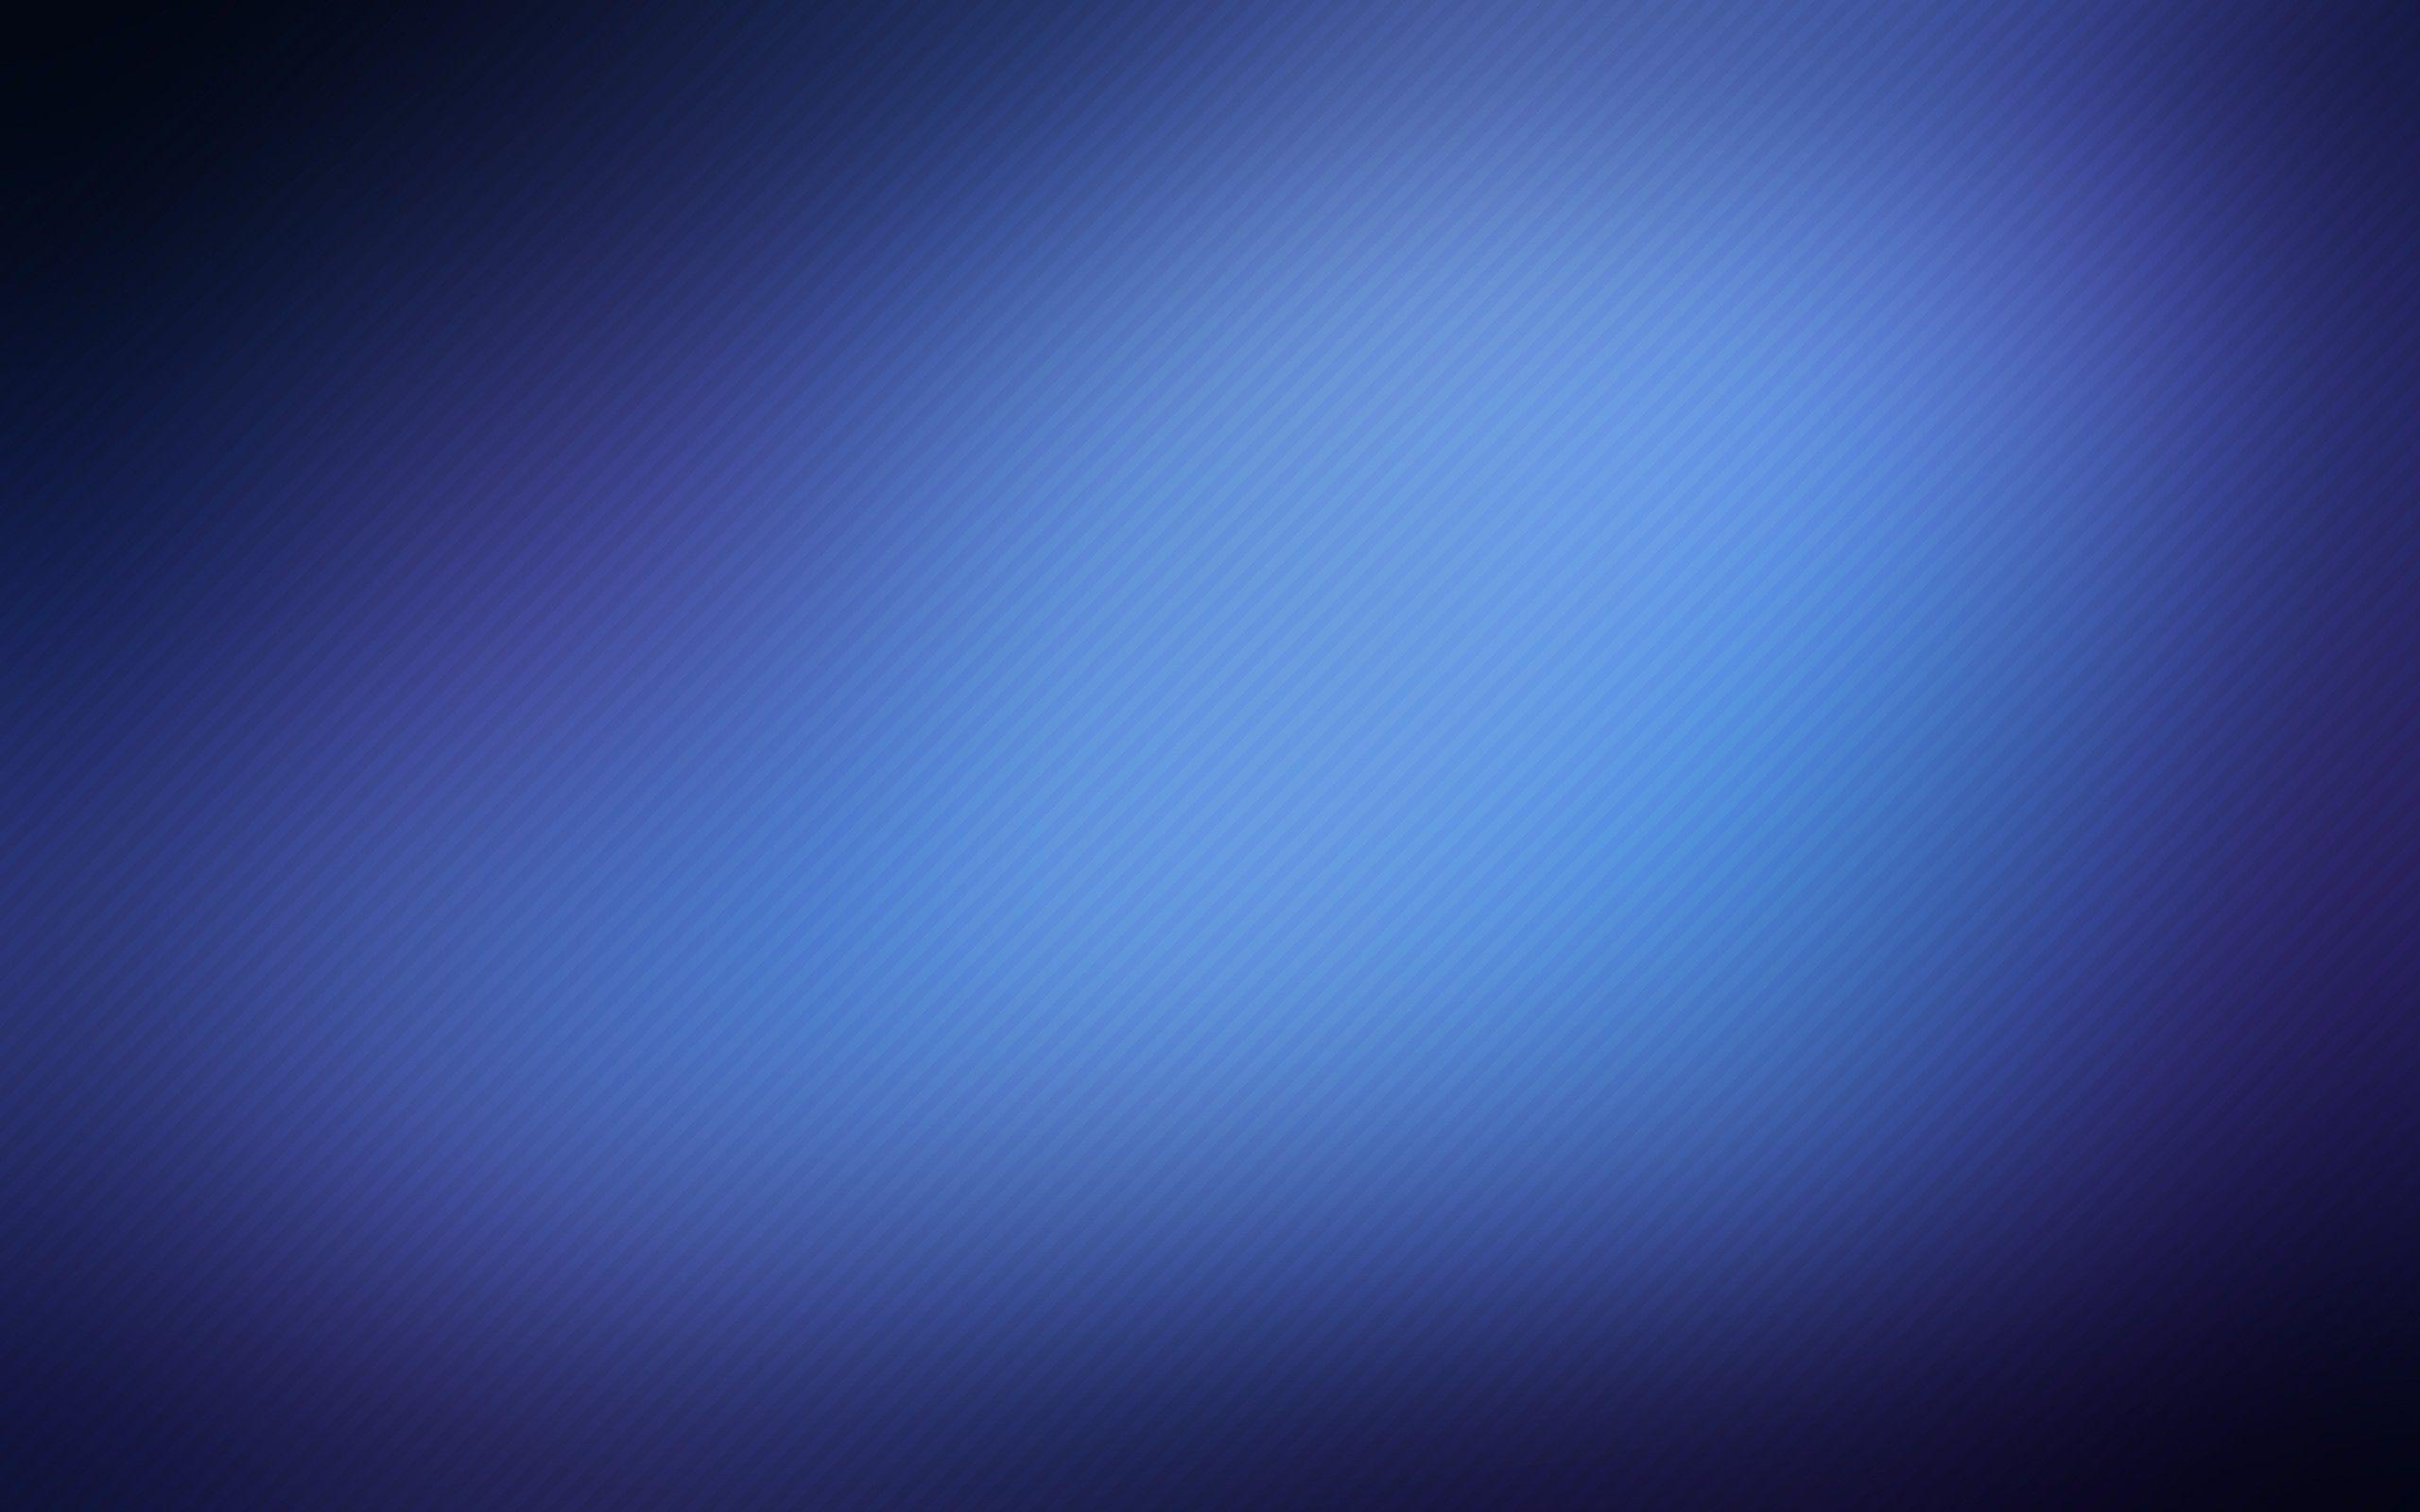 Smooth Blue HD Smooth Blue wallpaper for desktop